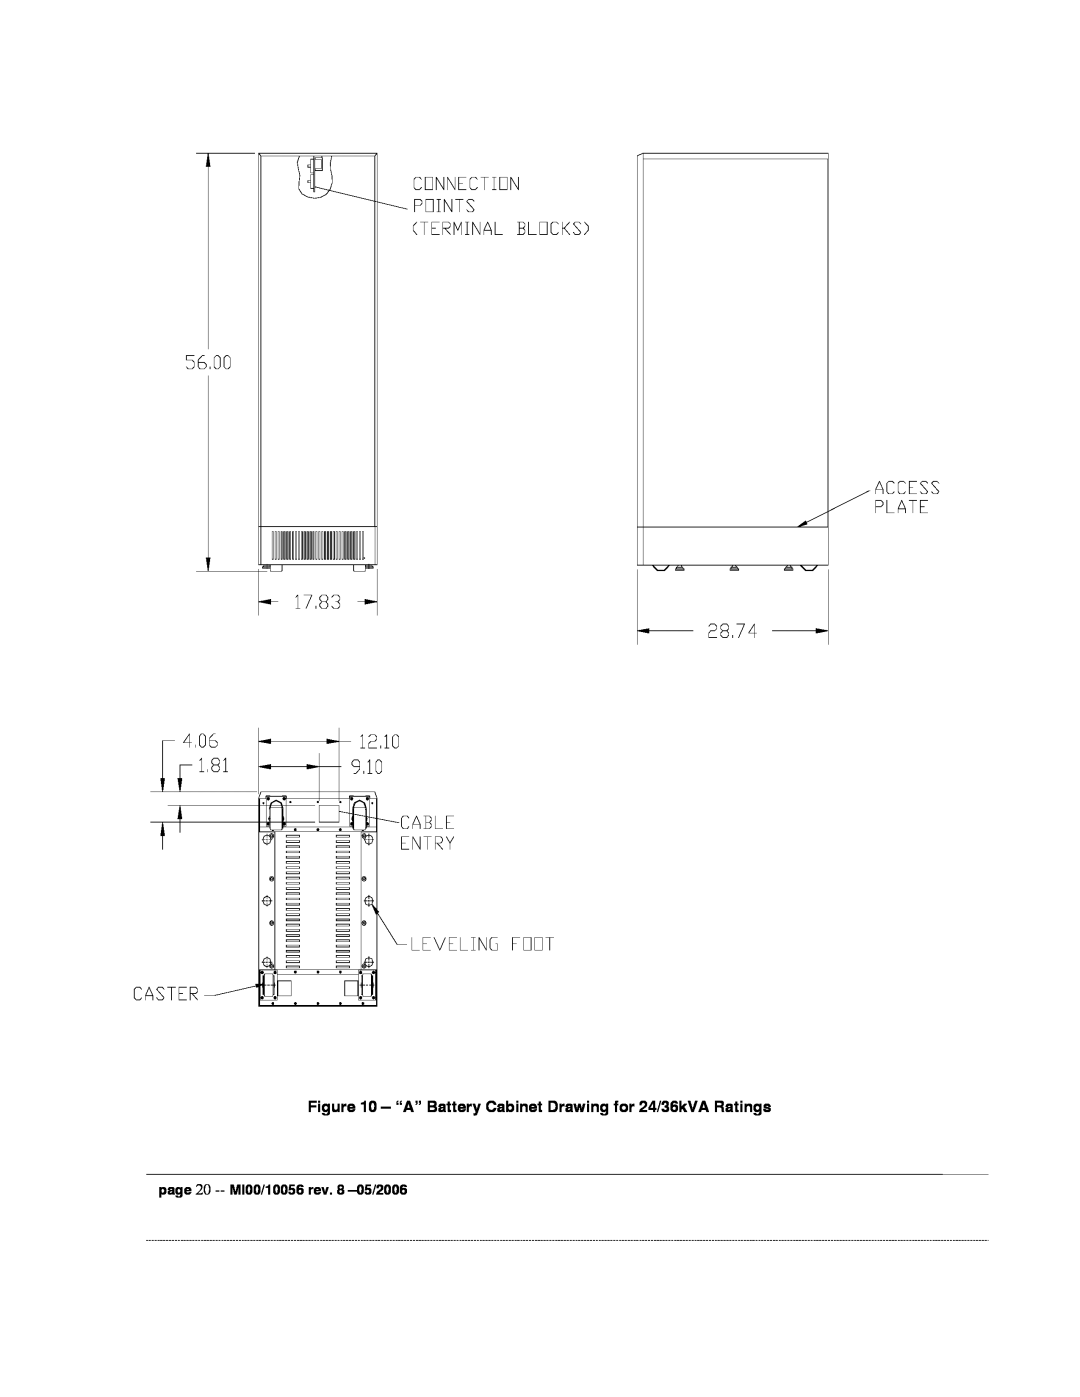 Garmin EDP70 manual “A” Battery Cabinet Drawing for 24/36kVA Ratings, page 20 -- MI00/10056 rev. 8 -05/2006 